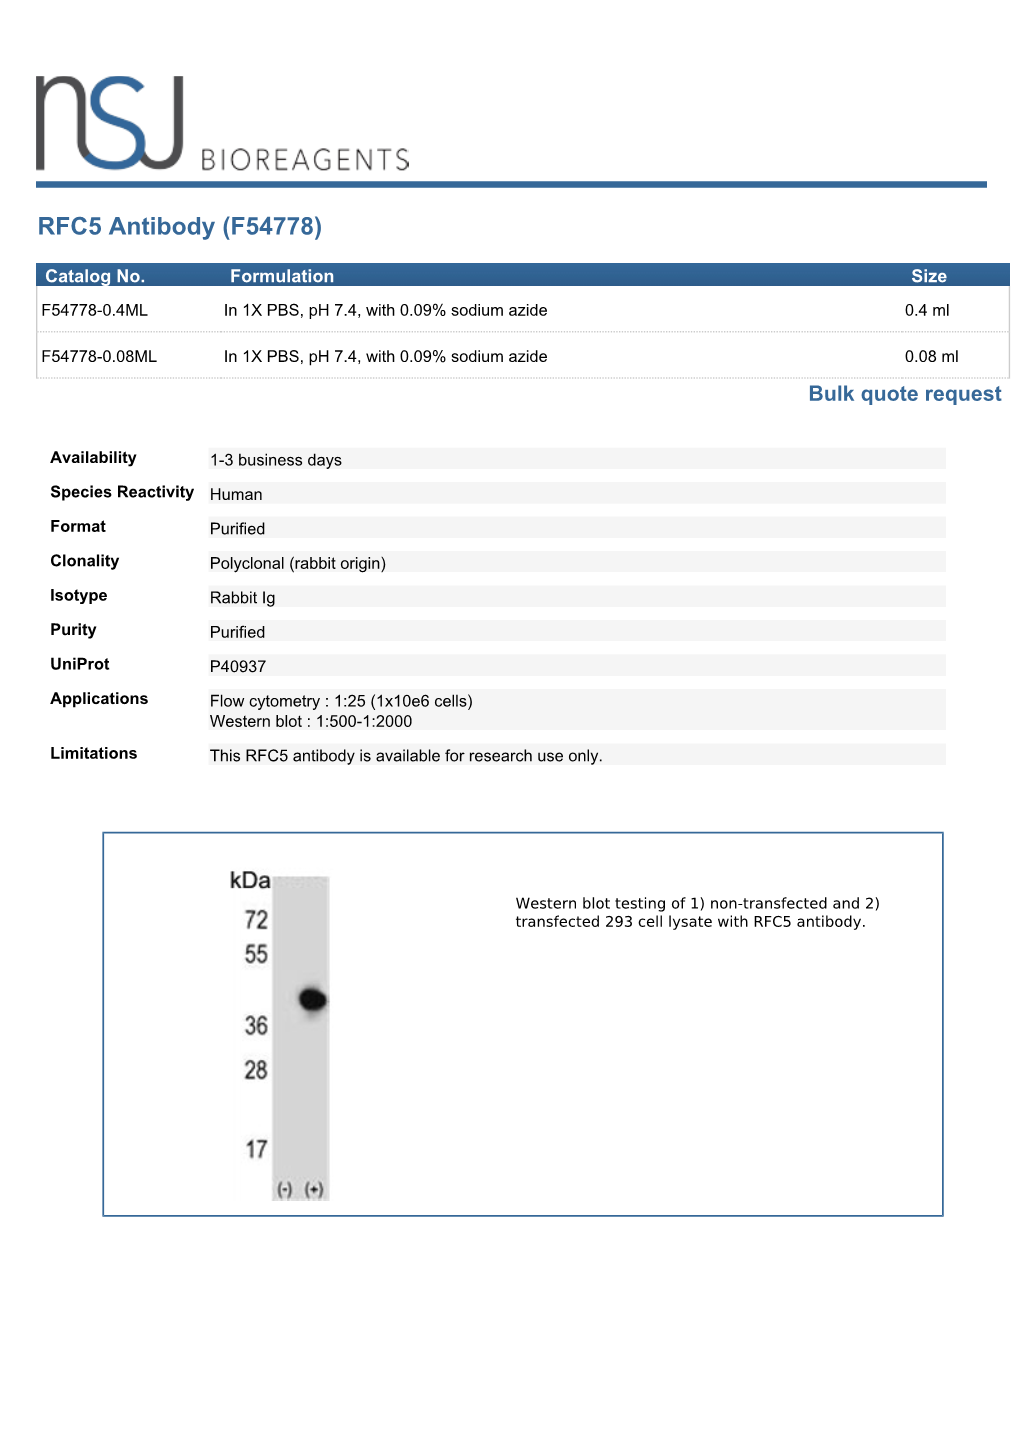 RFC5 Antibody (F54778)